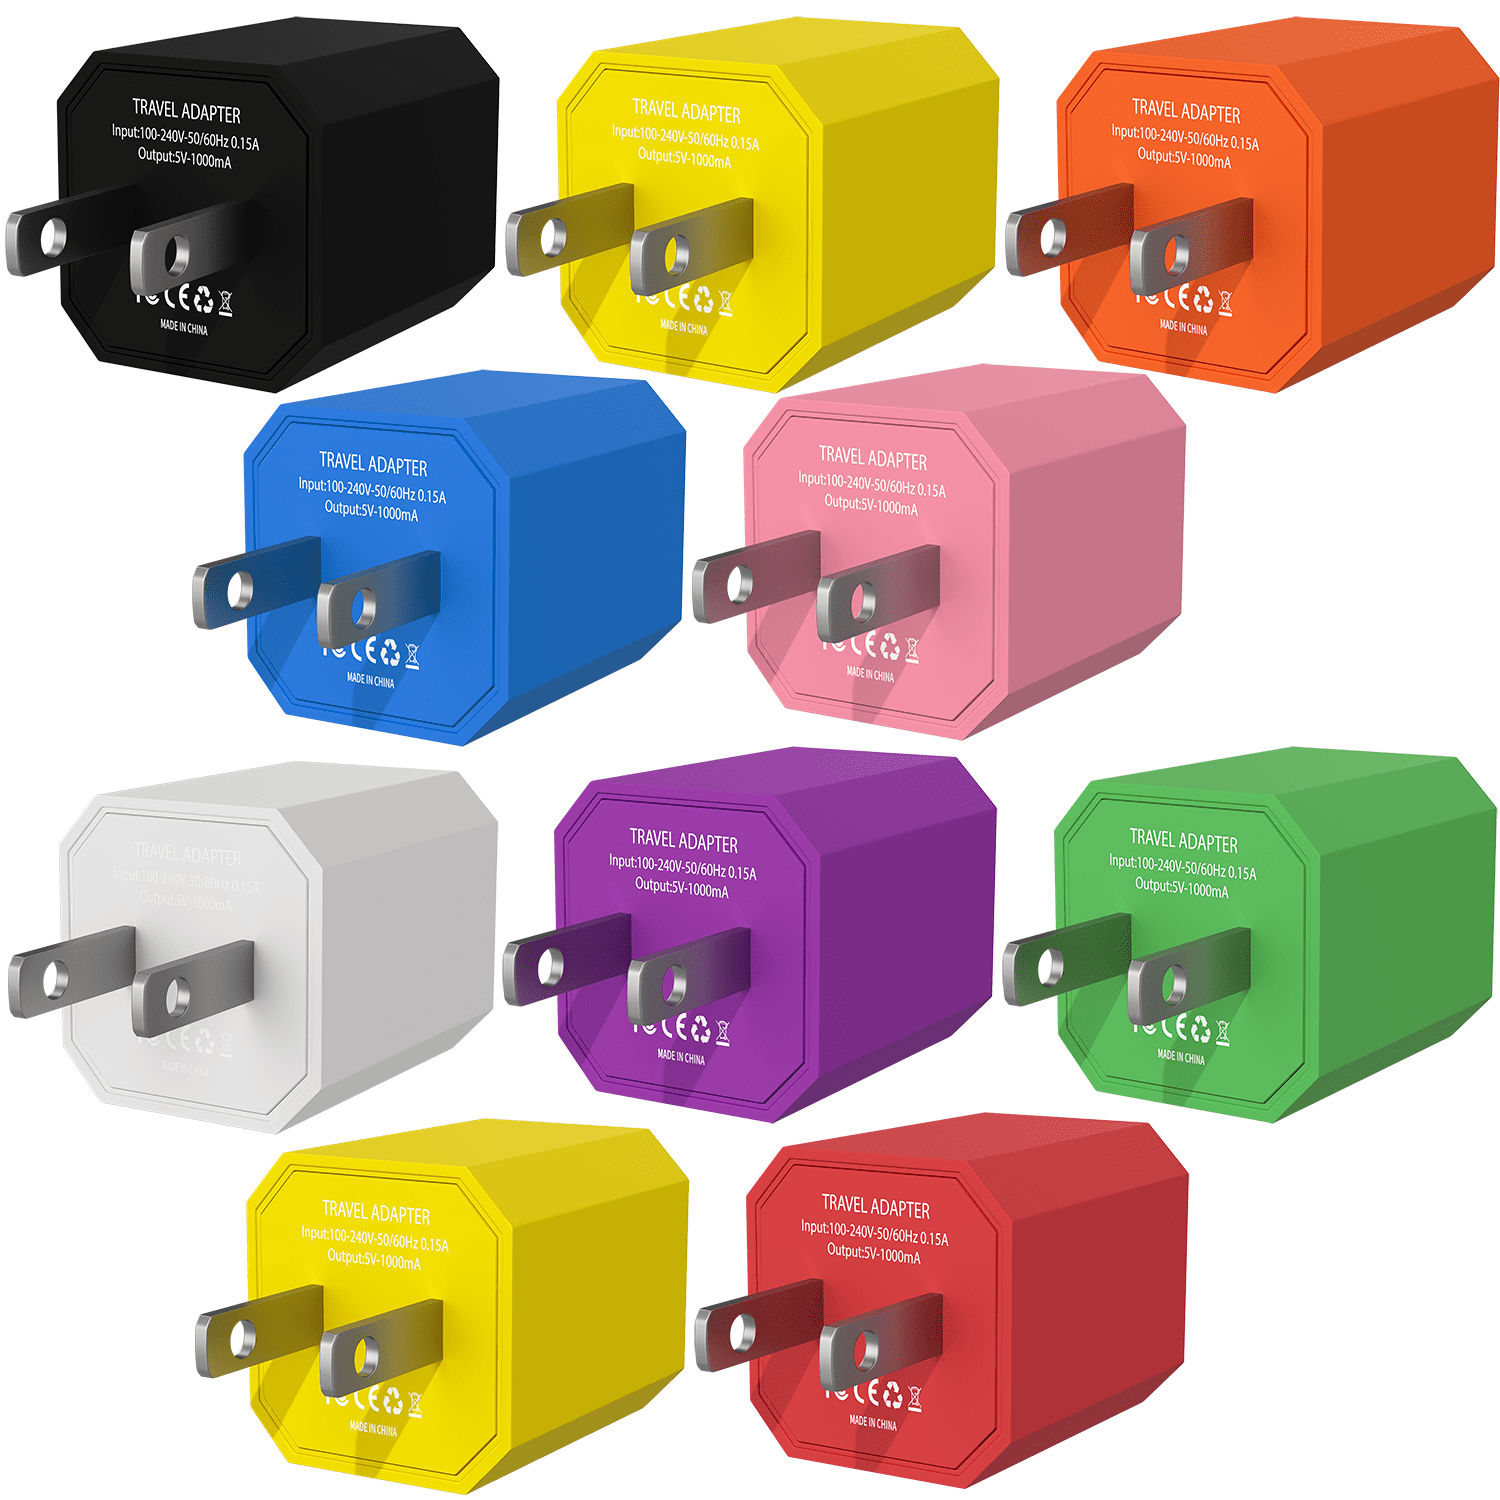 Single Port USB Charger Plug,HopePow 3Pack 1A/5V USB Wall Charger Box Block Cube Power Adapter Compatible Samsung Galaxy S10E S9 S8 A90 A10E A20S A50 Note10+,iPhone11 XS/XR/X/8/7,LG,Nexus,Moto,OnePlus 